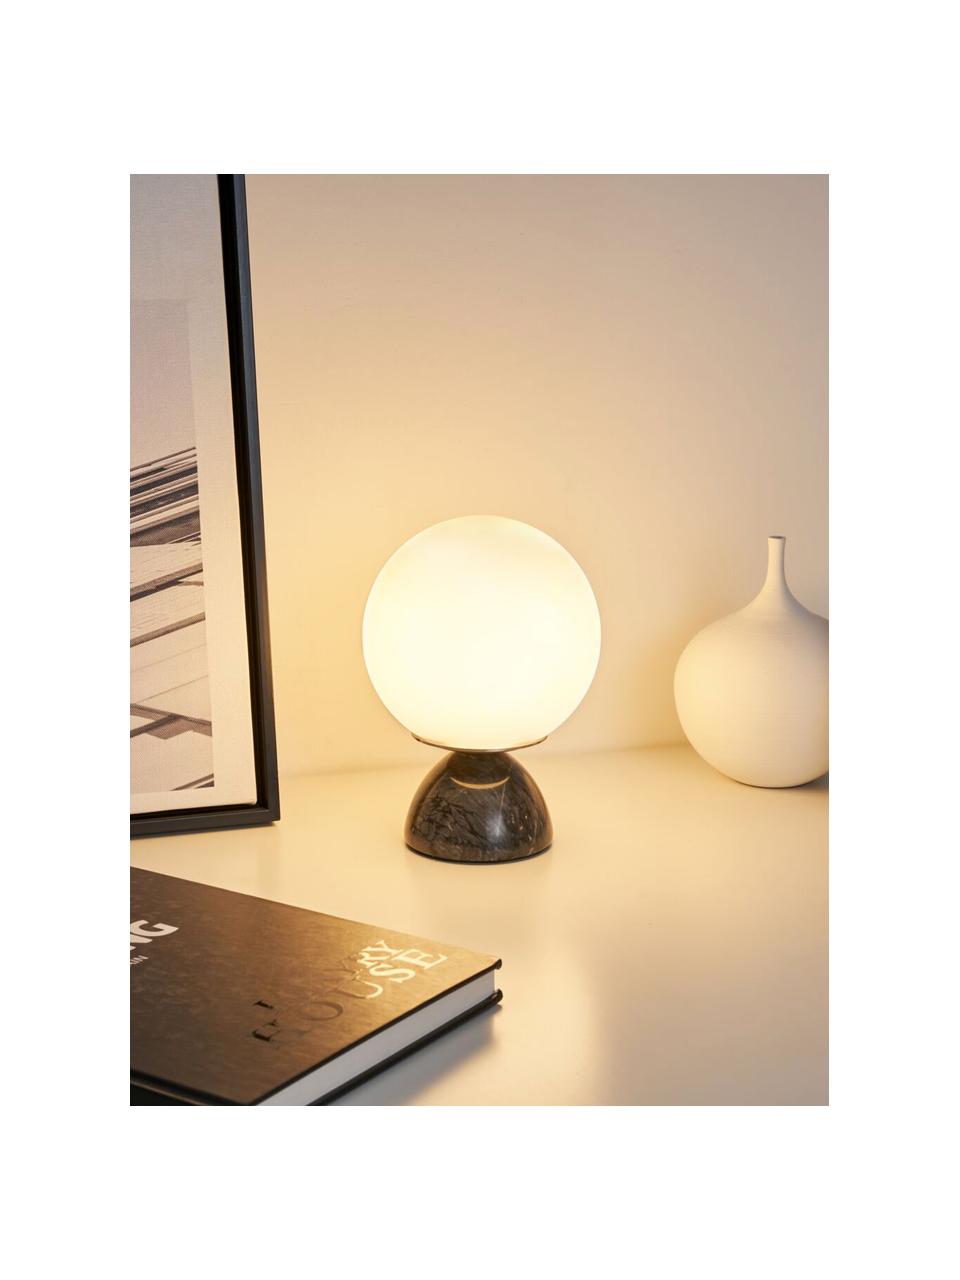 Lampe de table en marbre Shining Pearl, Noir, blanc, Ø 15 x haut. 21 cm